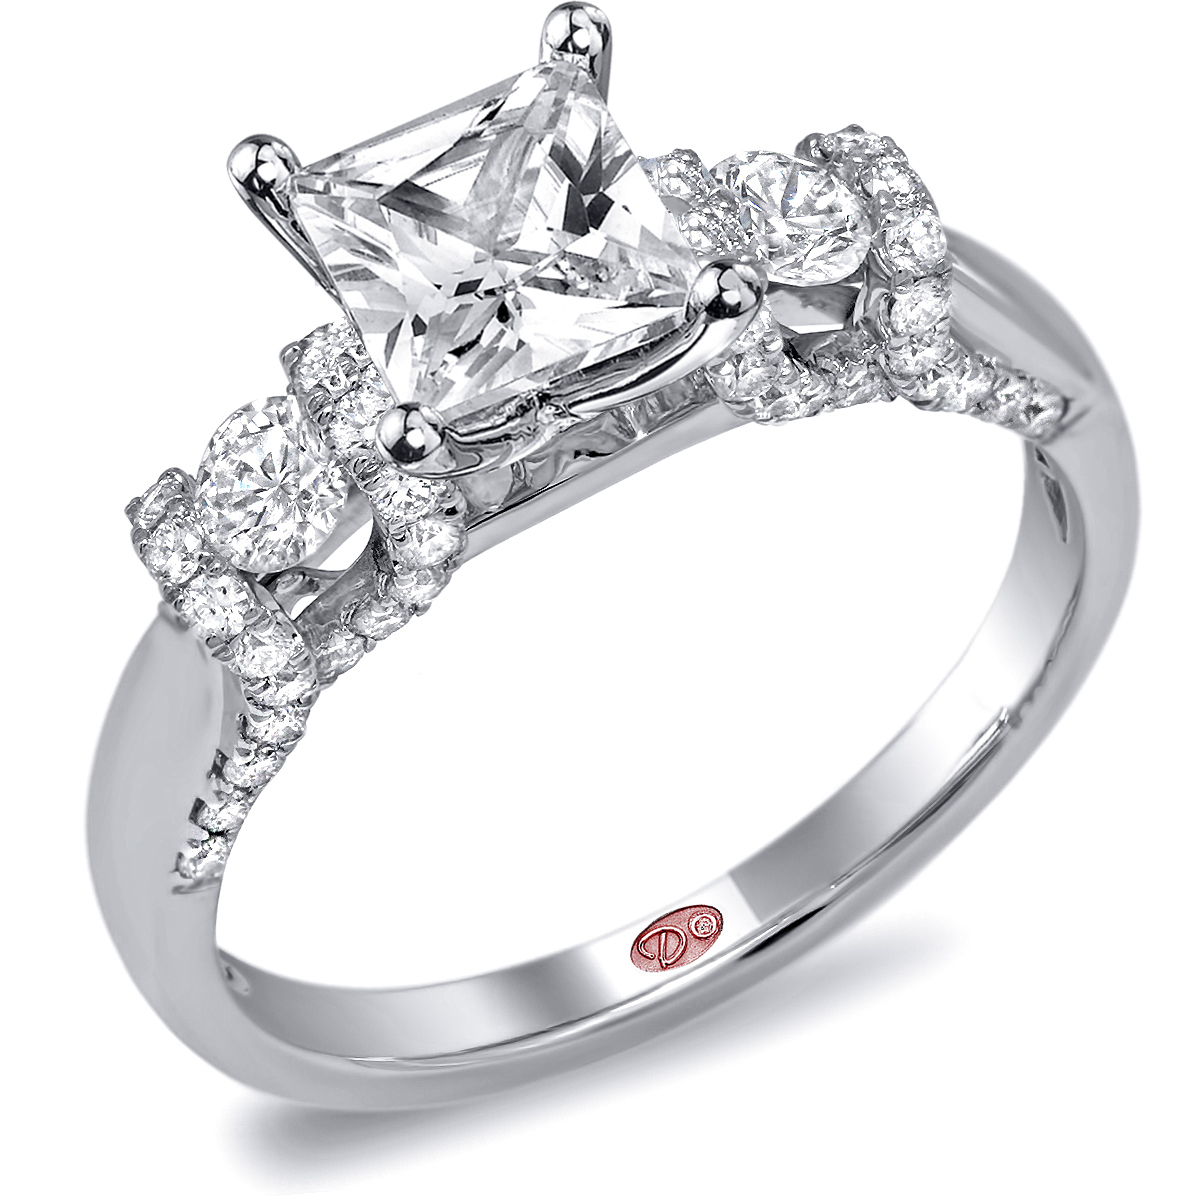 Princess Cut Engagement Ring - DW6219